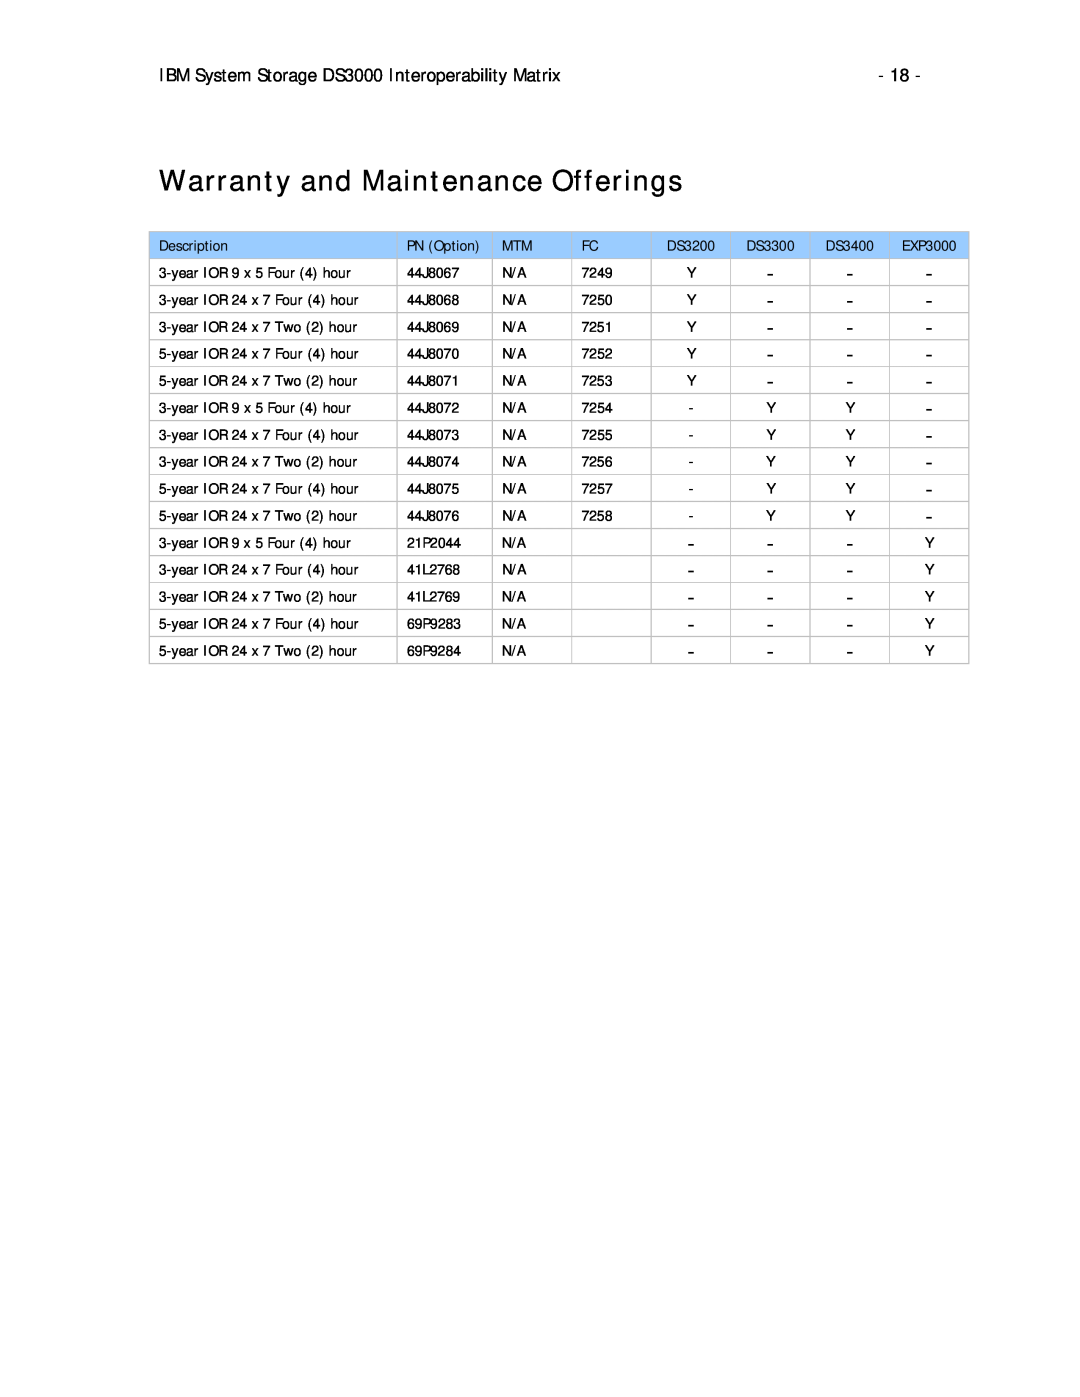 IBM DS3000 Series, DS3200, DS3300 Warranty and Maintenance Offerings, IBM System Storage DS3000 Interoperability Matrix 